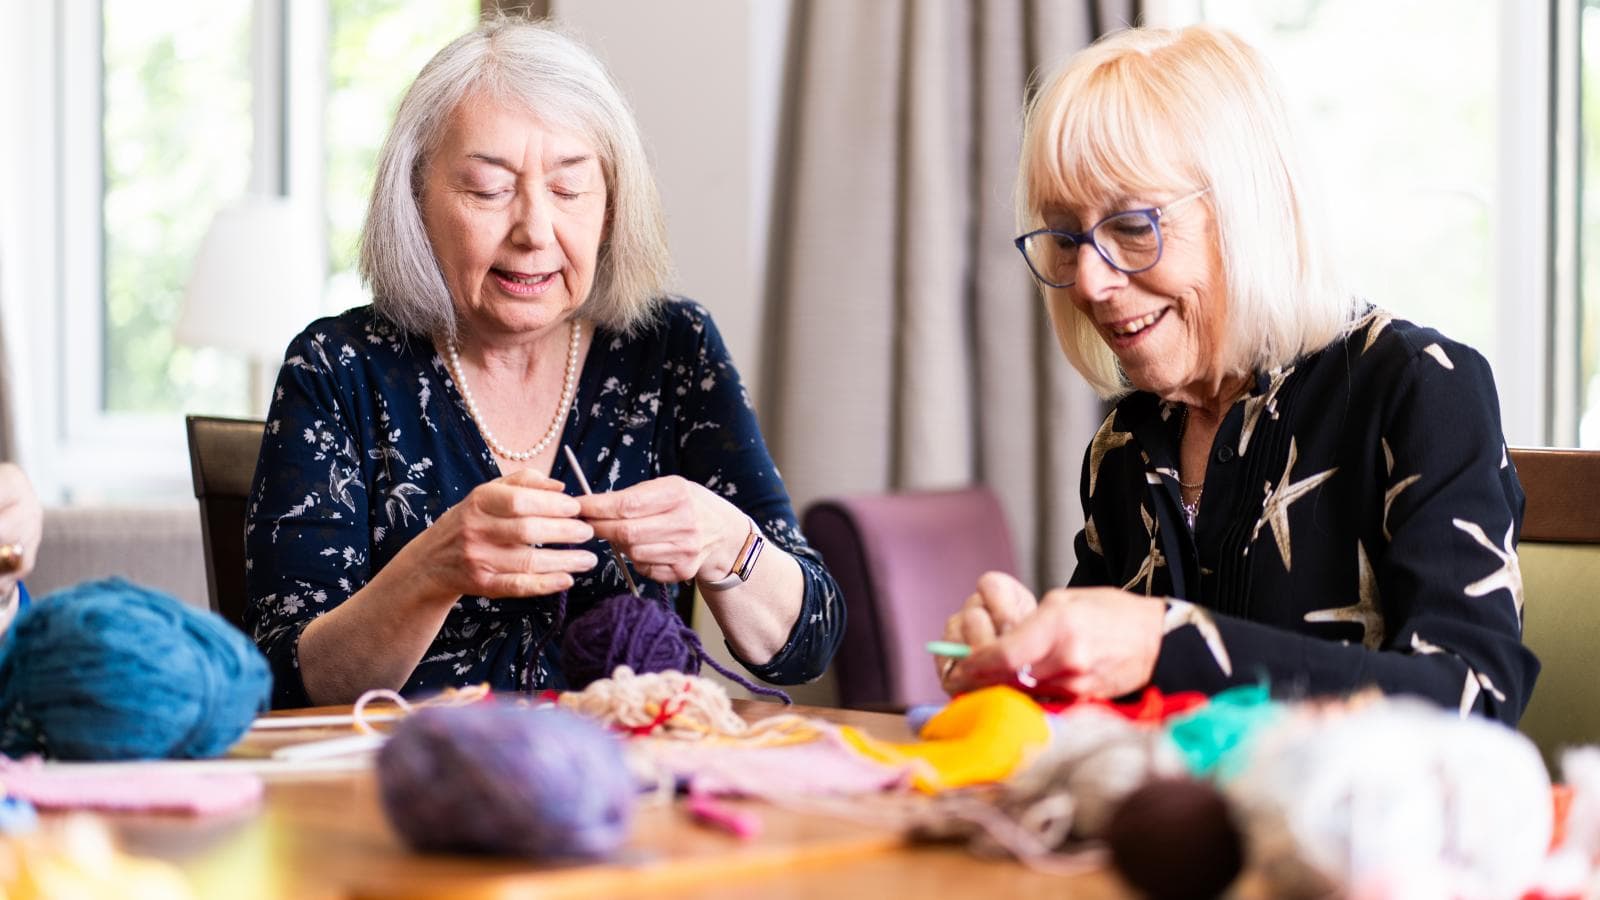 Two older women sat together knitting